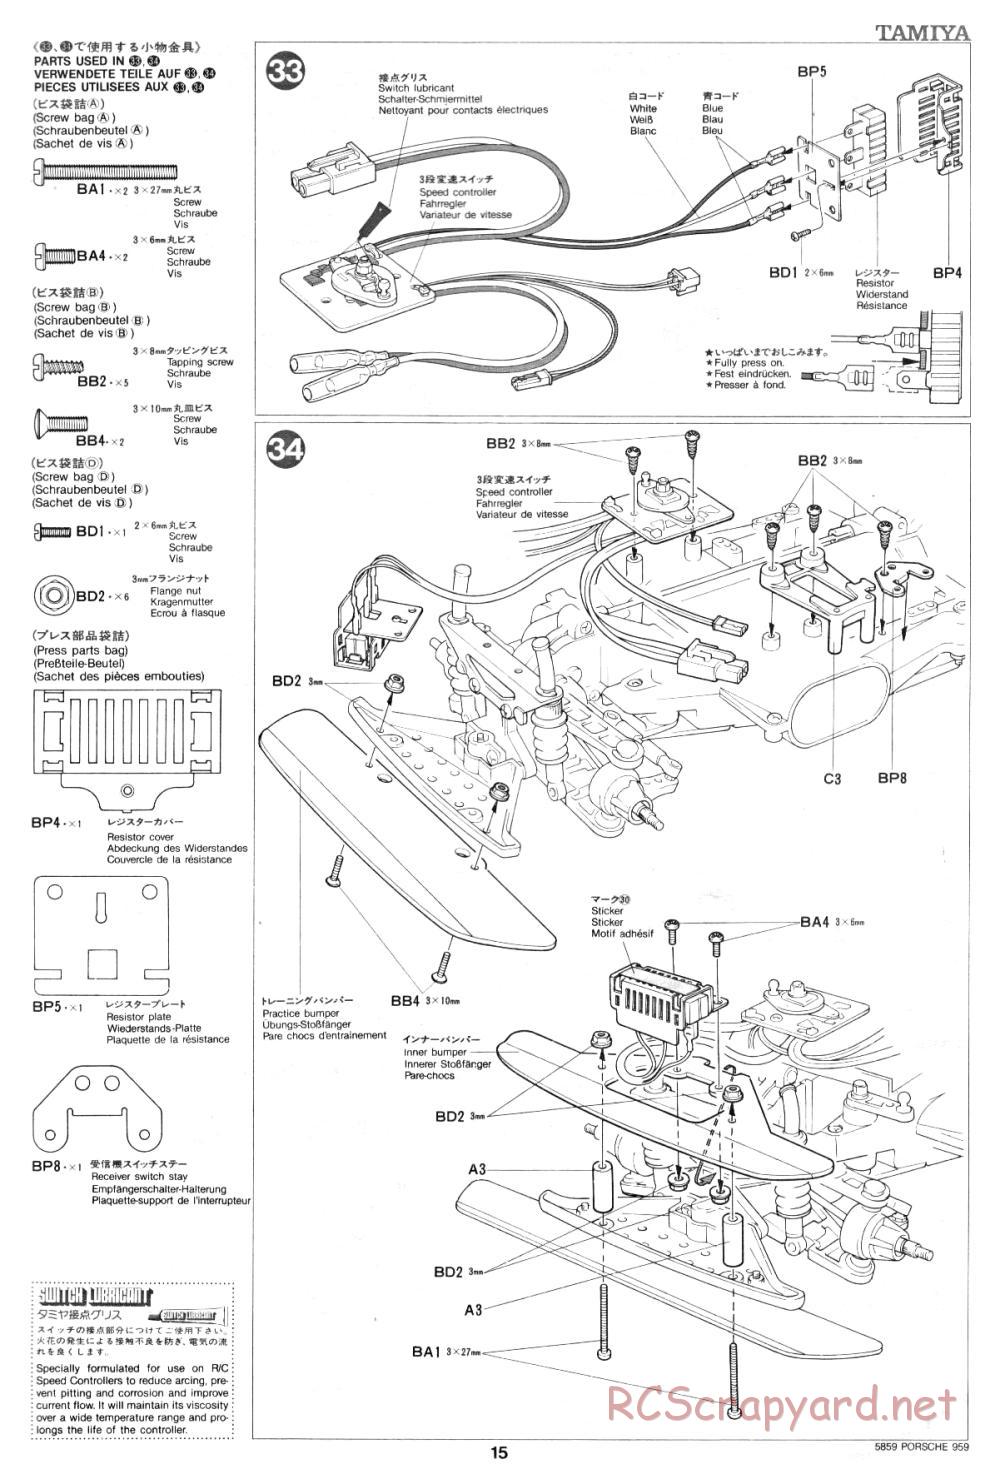 Tamiya - Porsche 959 - 58059 - Manual - Page 15